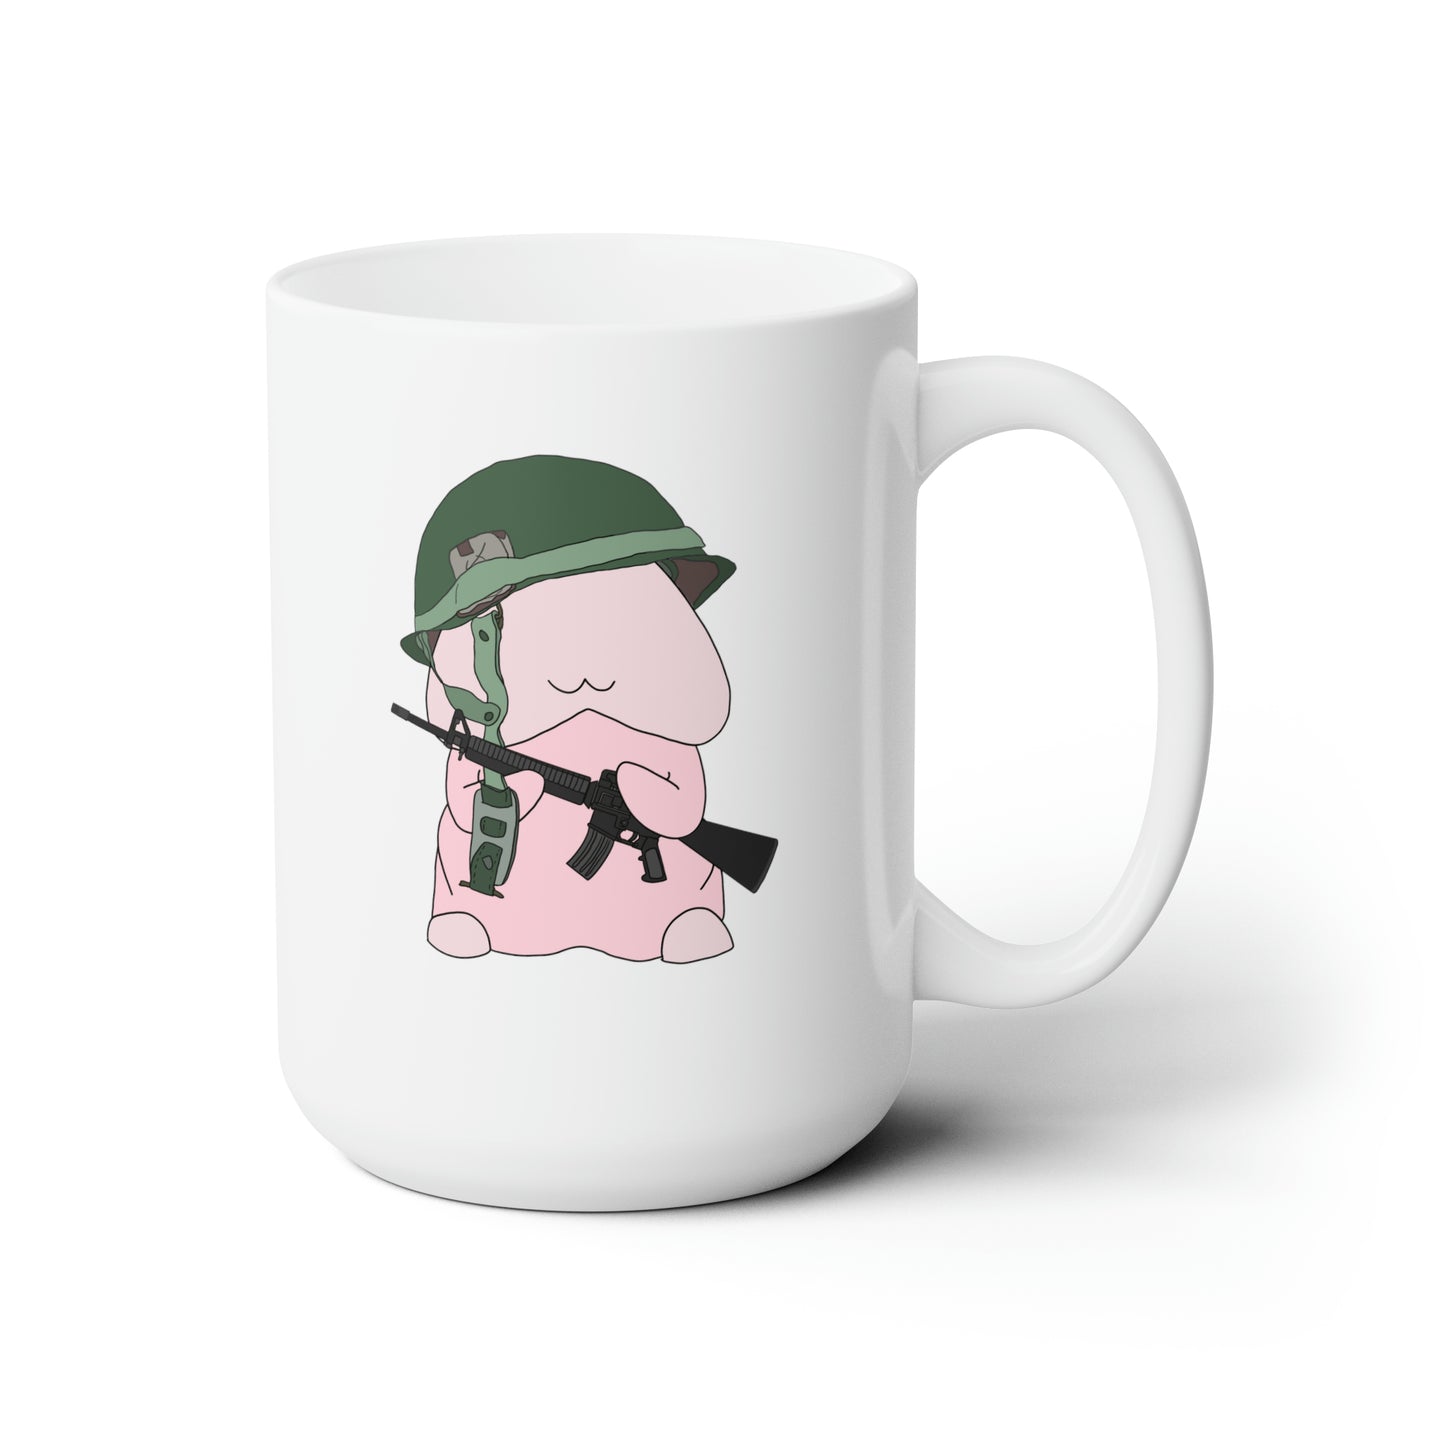 Green Weenie and Protected Ceramic Mug 15oz